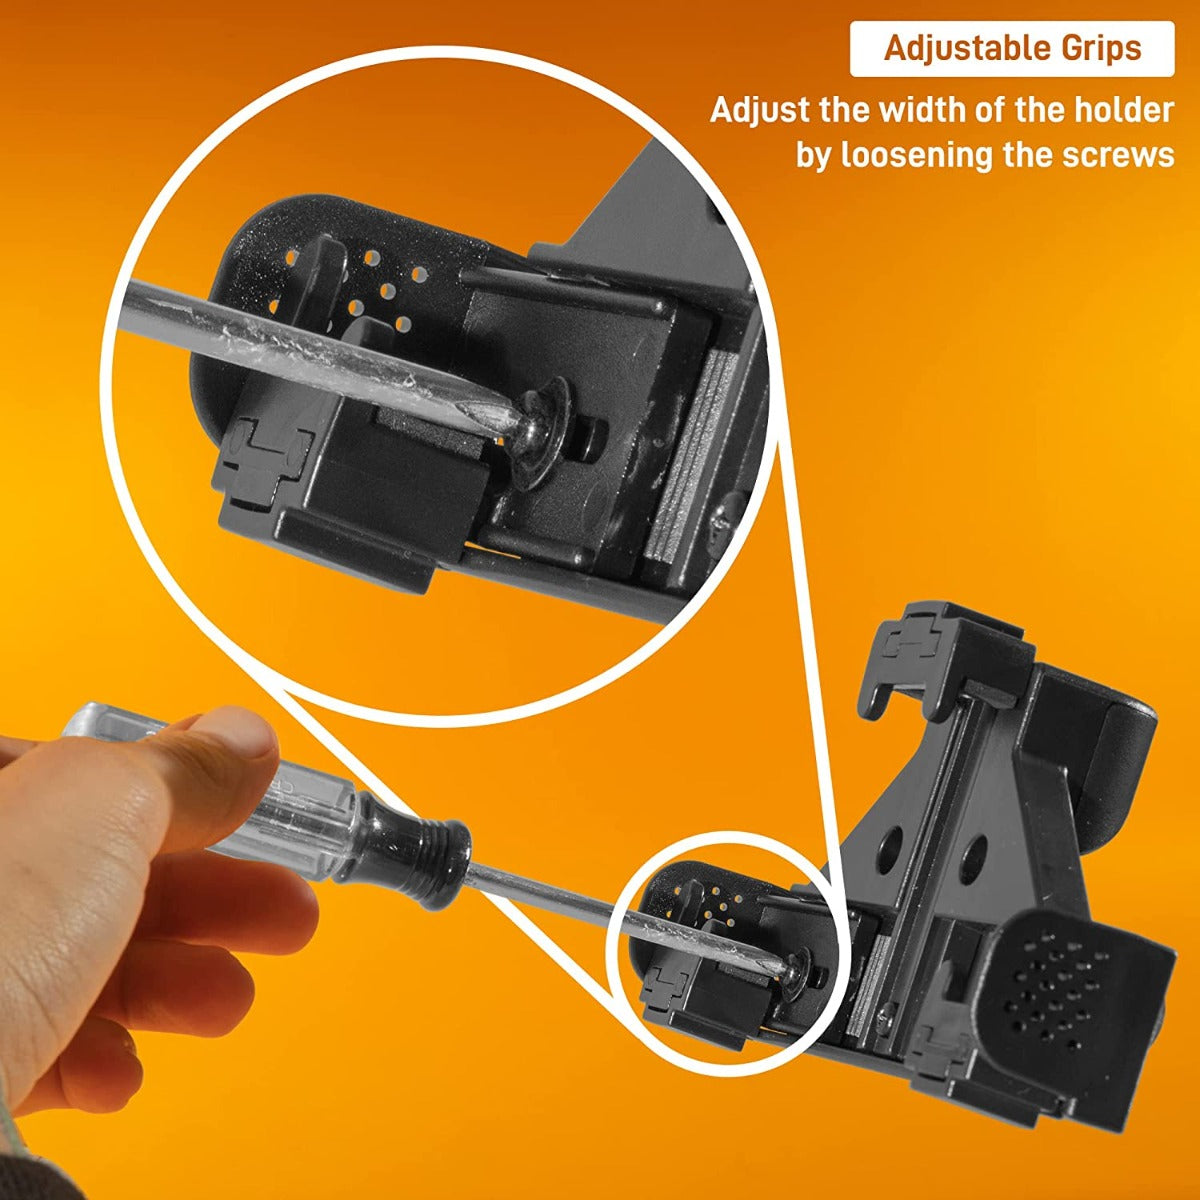 iBOLT Phone Dock’n Lock IncrediBOLT™ AMPS w/ 4.25” Arm Locking Drill Base Mount for Smartphones